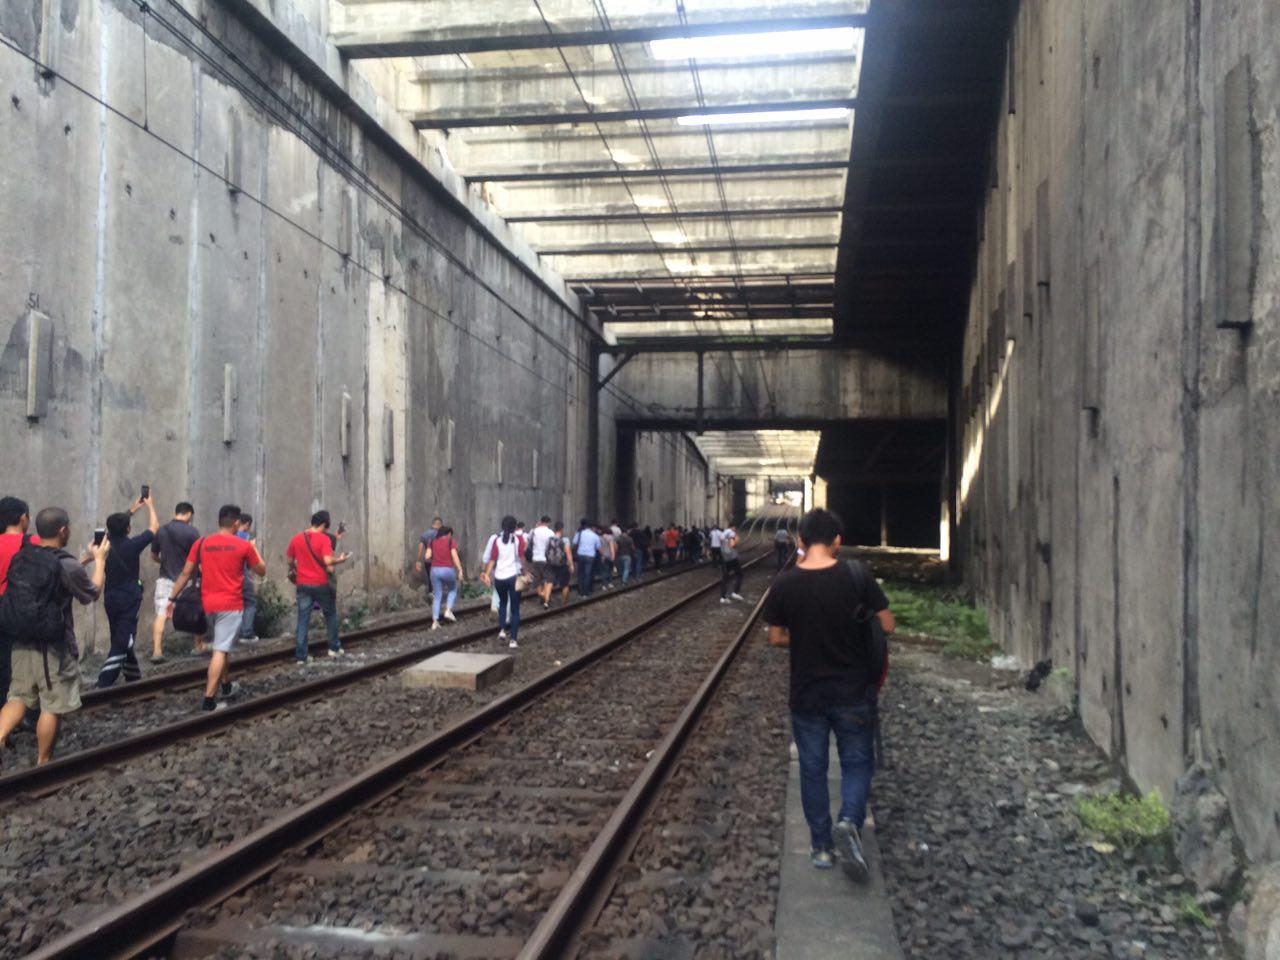 NBI to probe detached MRT train as sabotage angle floated